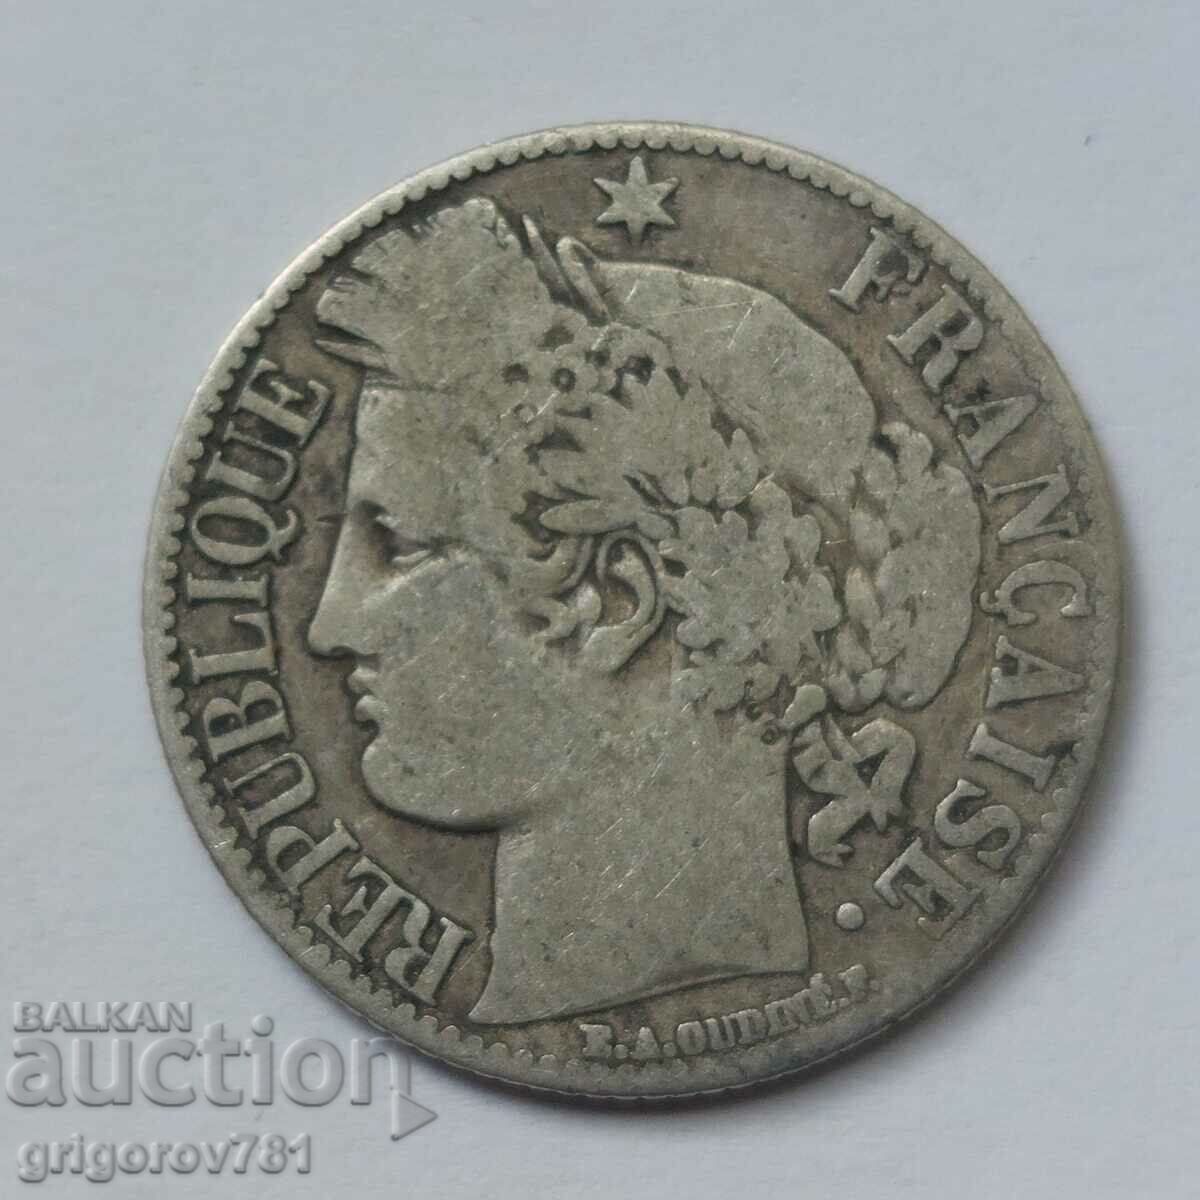 1 Franc Silver France 1872 A - Silver Coin #44